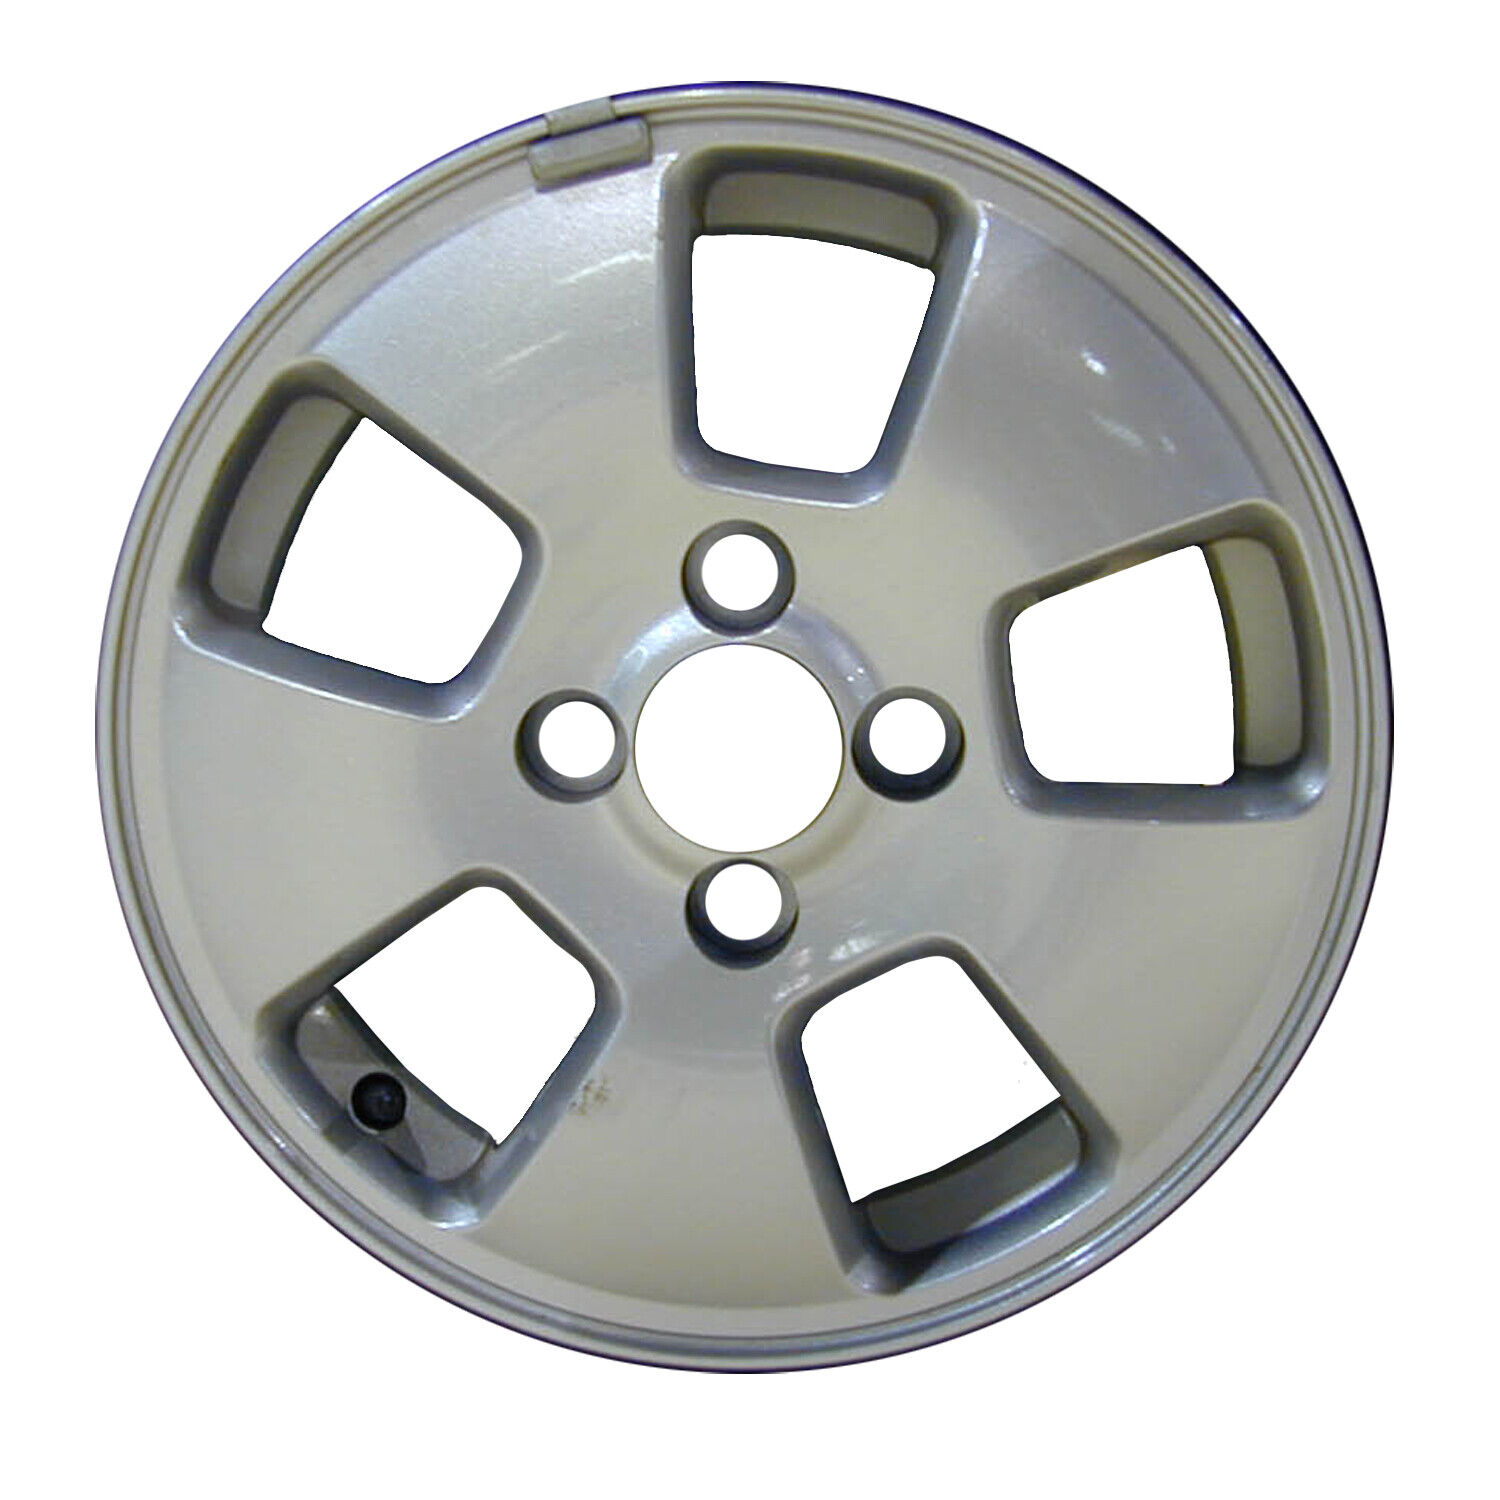 06602 Reconditioned OEM Aluminum Wheel 14x5.5 fits 2006-2008 Aveo Hatchback